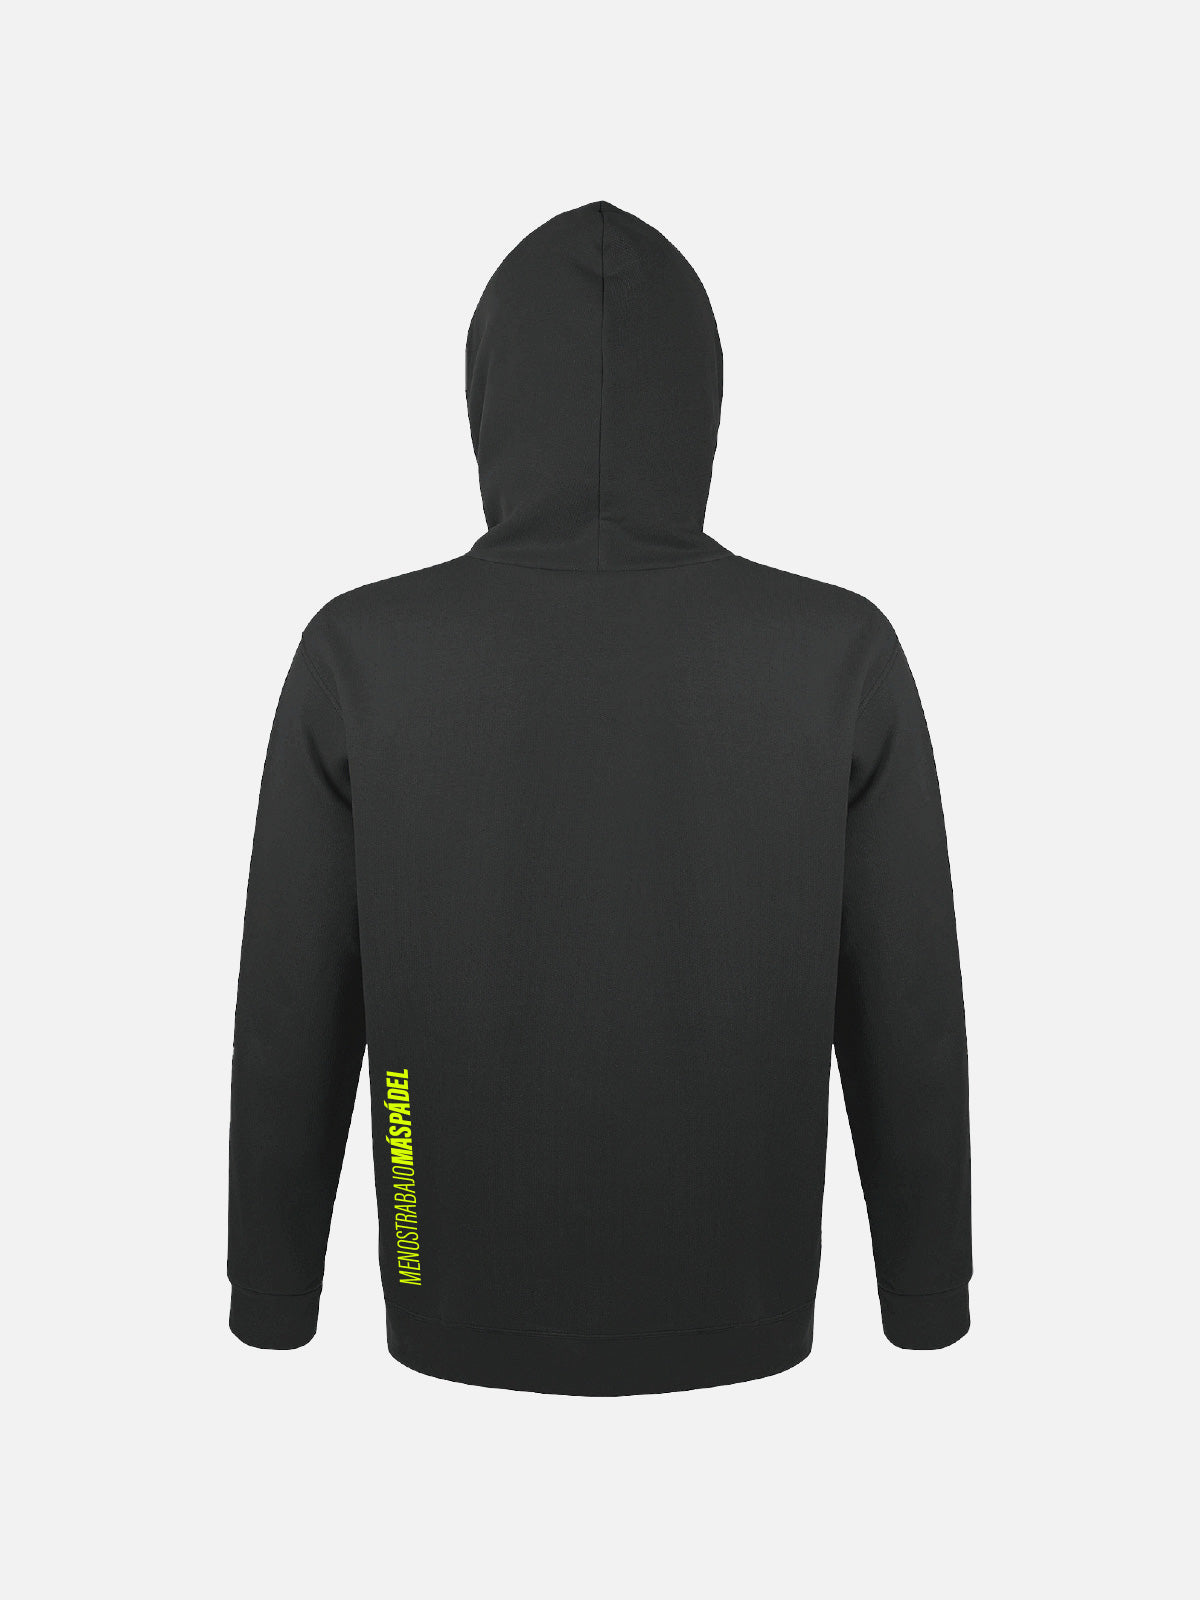 Iconic Unisex Sweatshirt - Black